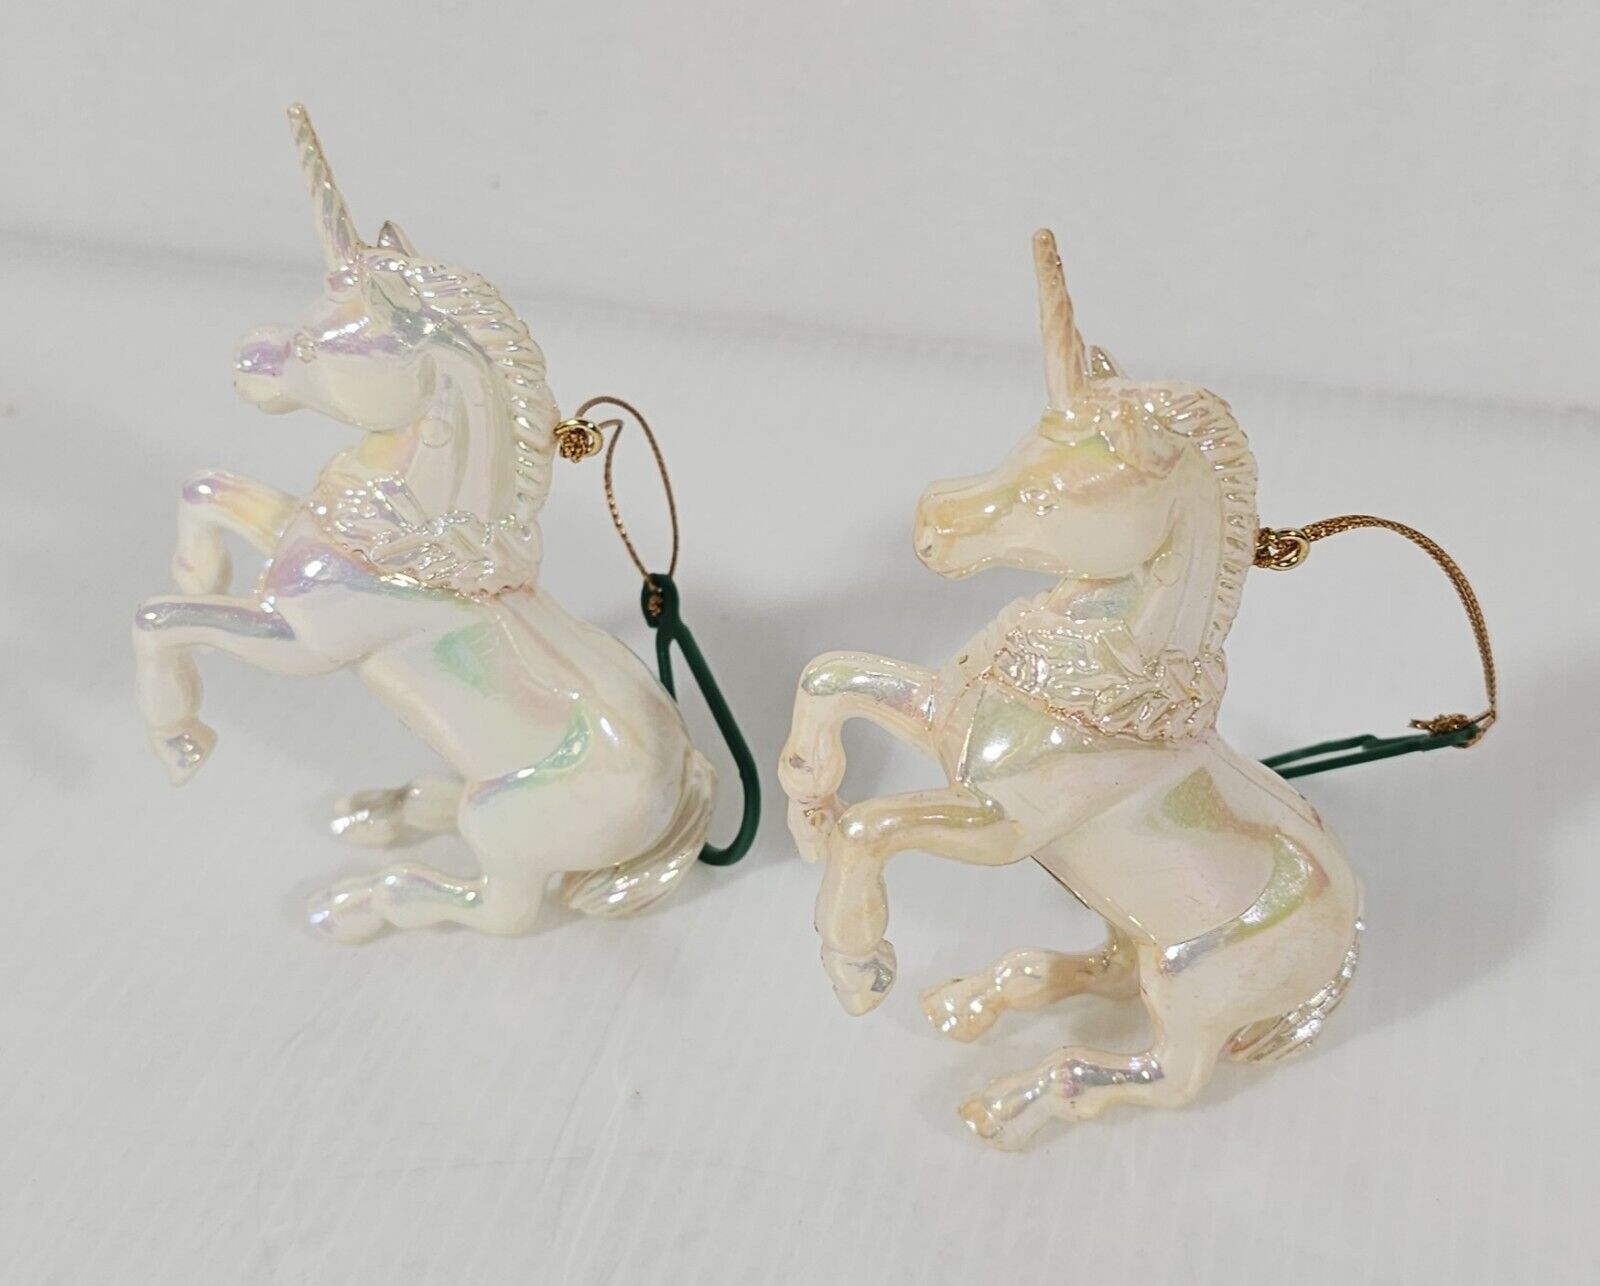 2 Vintage American Greetings Unicorns Christmas Holiday Ornaments